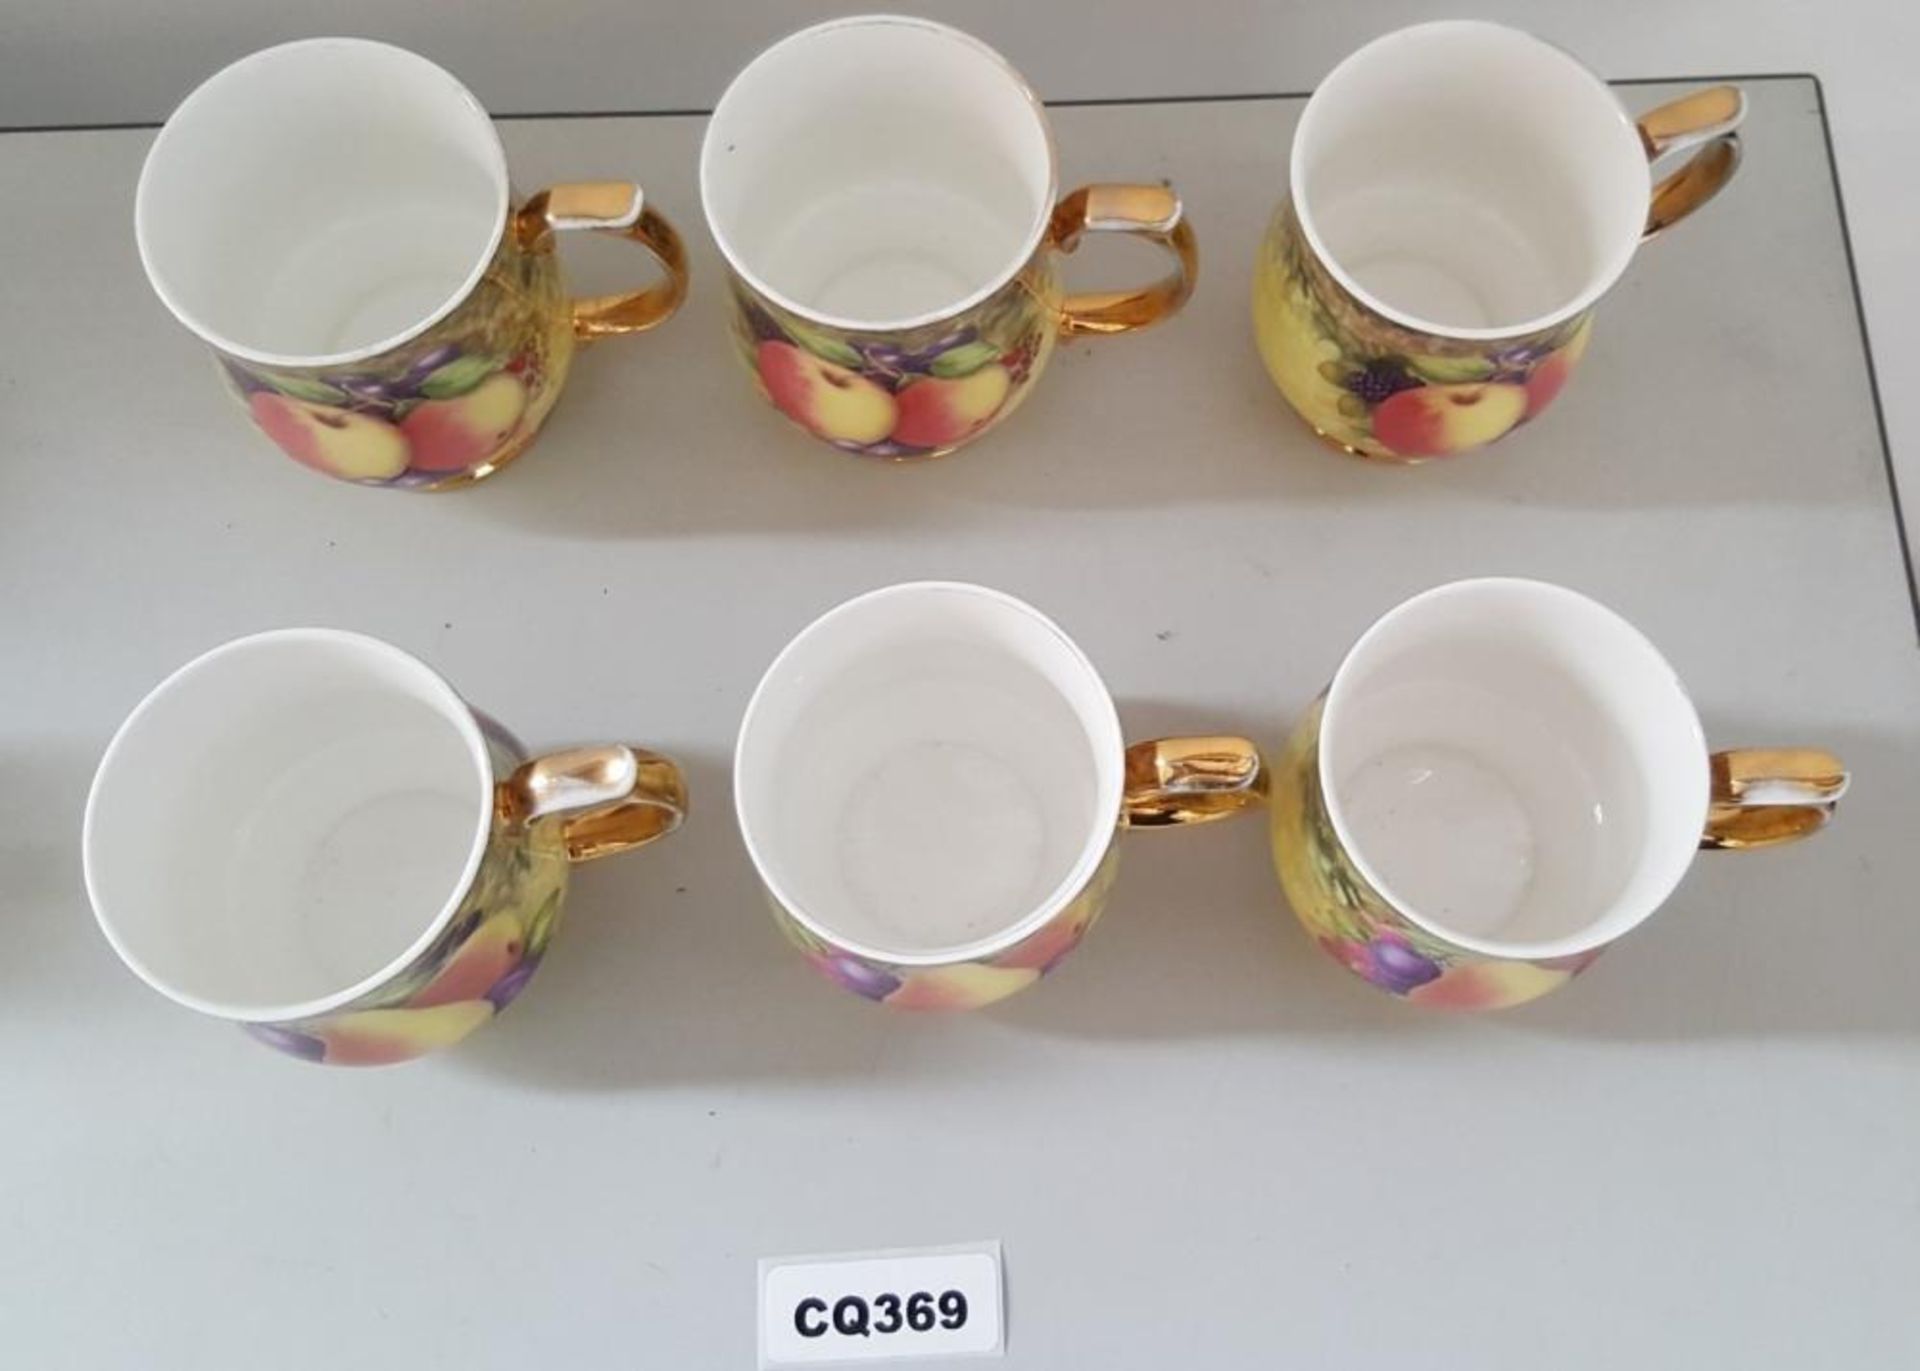 6 x Set Of Baron China Staffs LTD Mugs With Fruit Design - Ref CQ369 E - CL334 - Location: Altrincha - Image 2 of 5